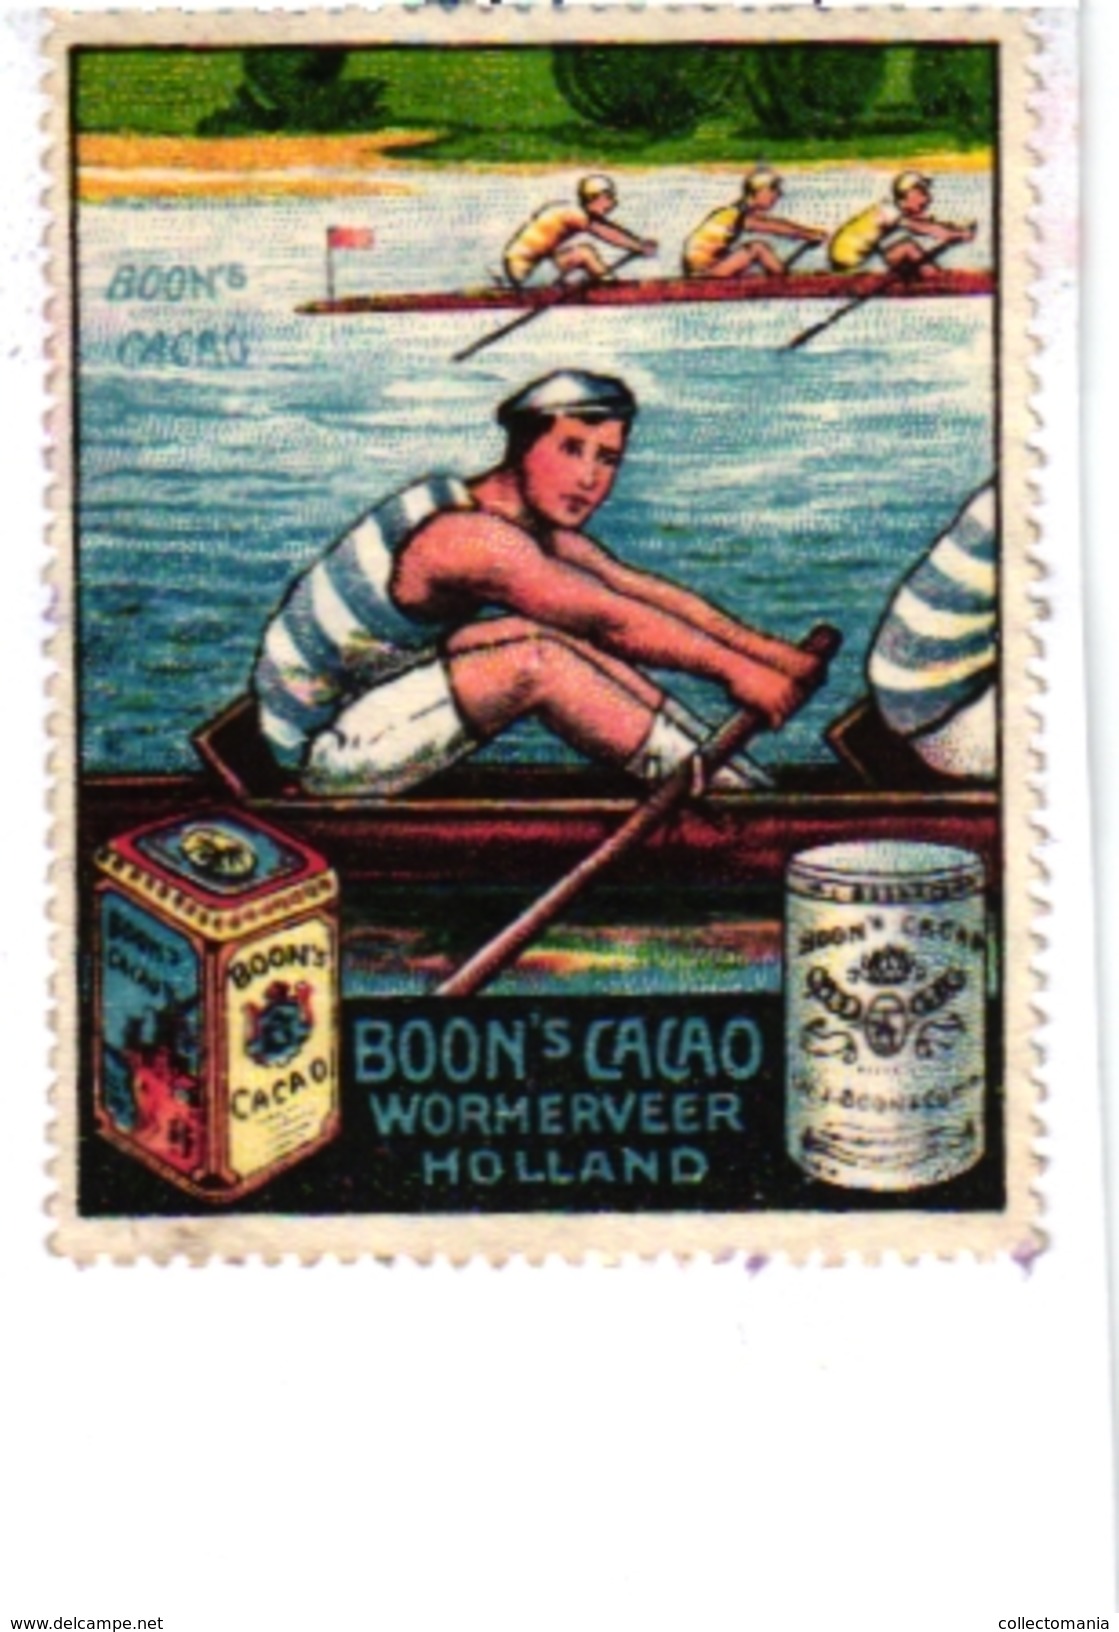 2 Poster Stamps Cinderella Rowing Canotage Regatta Skiff Sculling Pub  Schocolade Trumpf Boon's Cacao Wormerveer - Rudersport